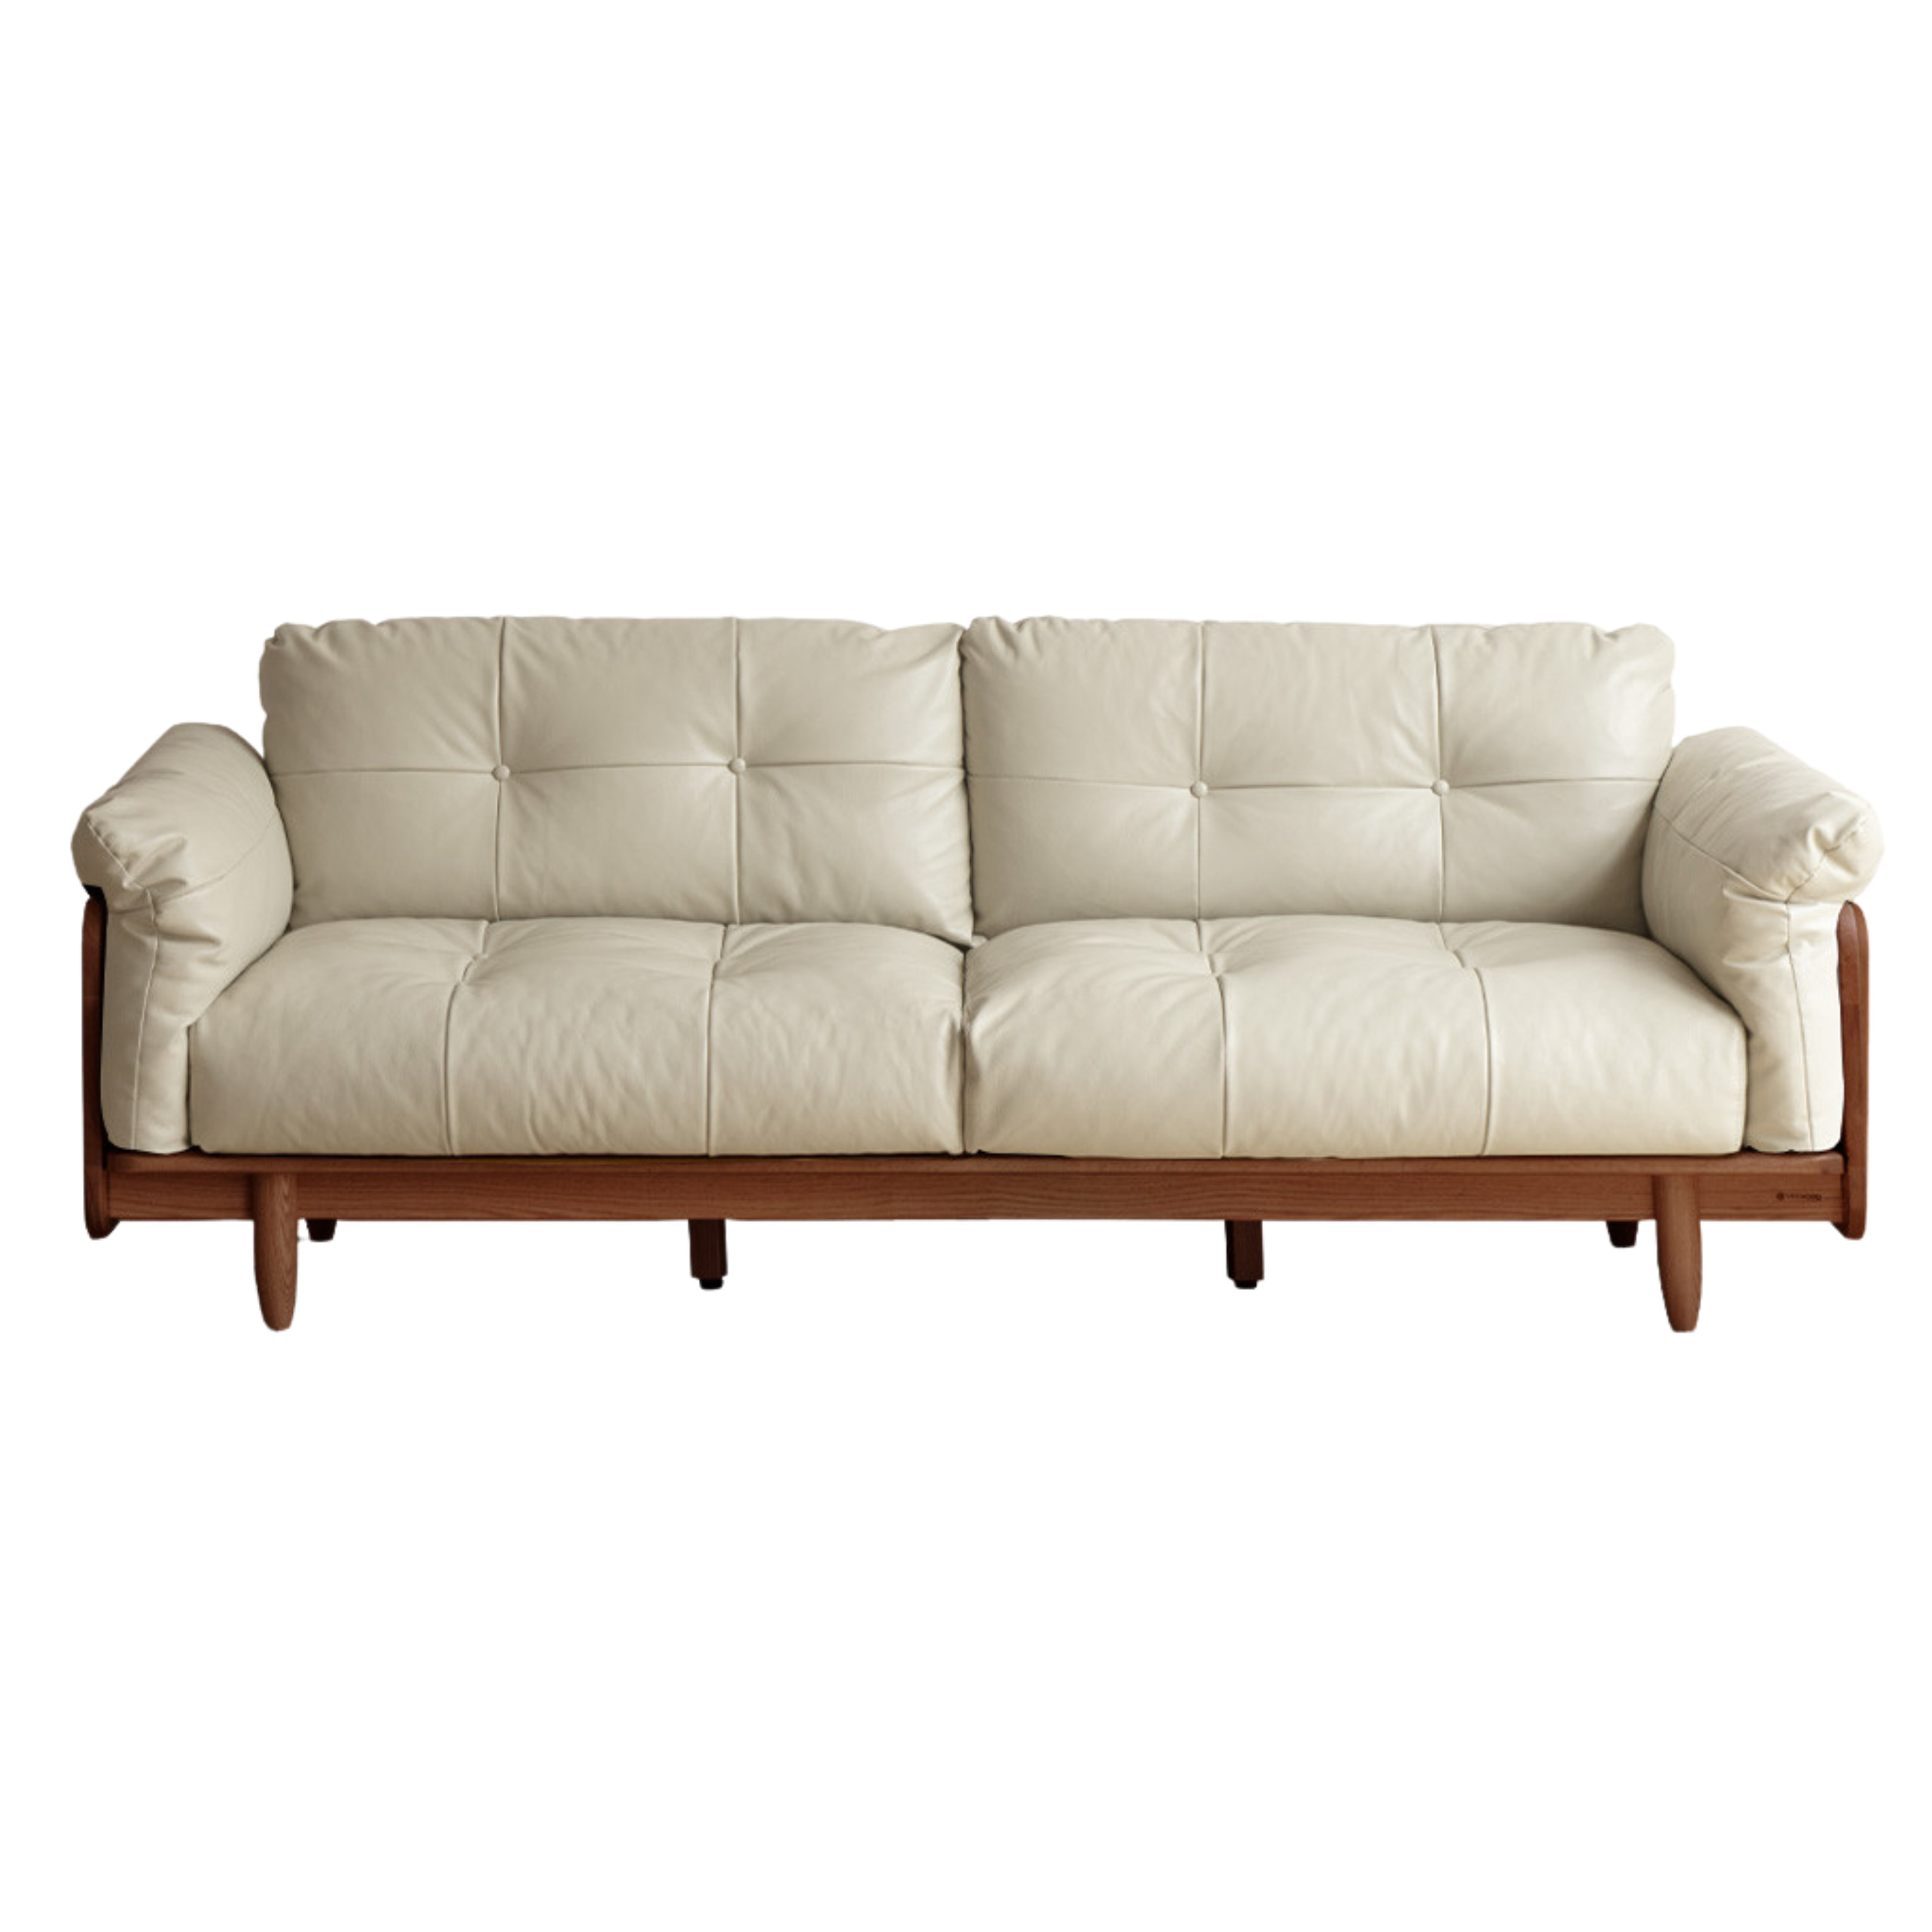 Black walnut solid wood Genuine leather sofa, Technology cloth sofa)